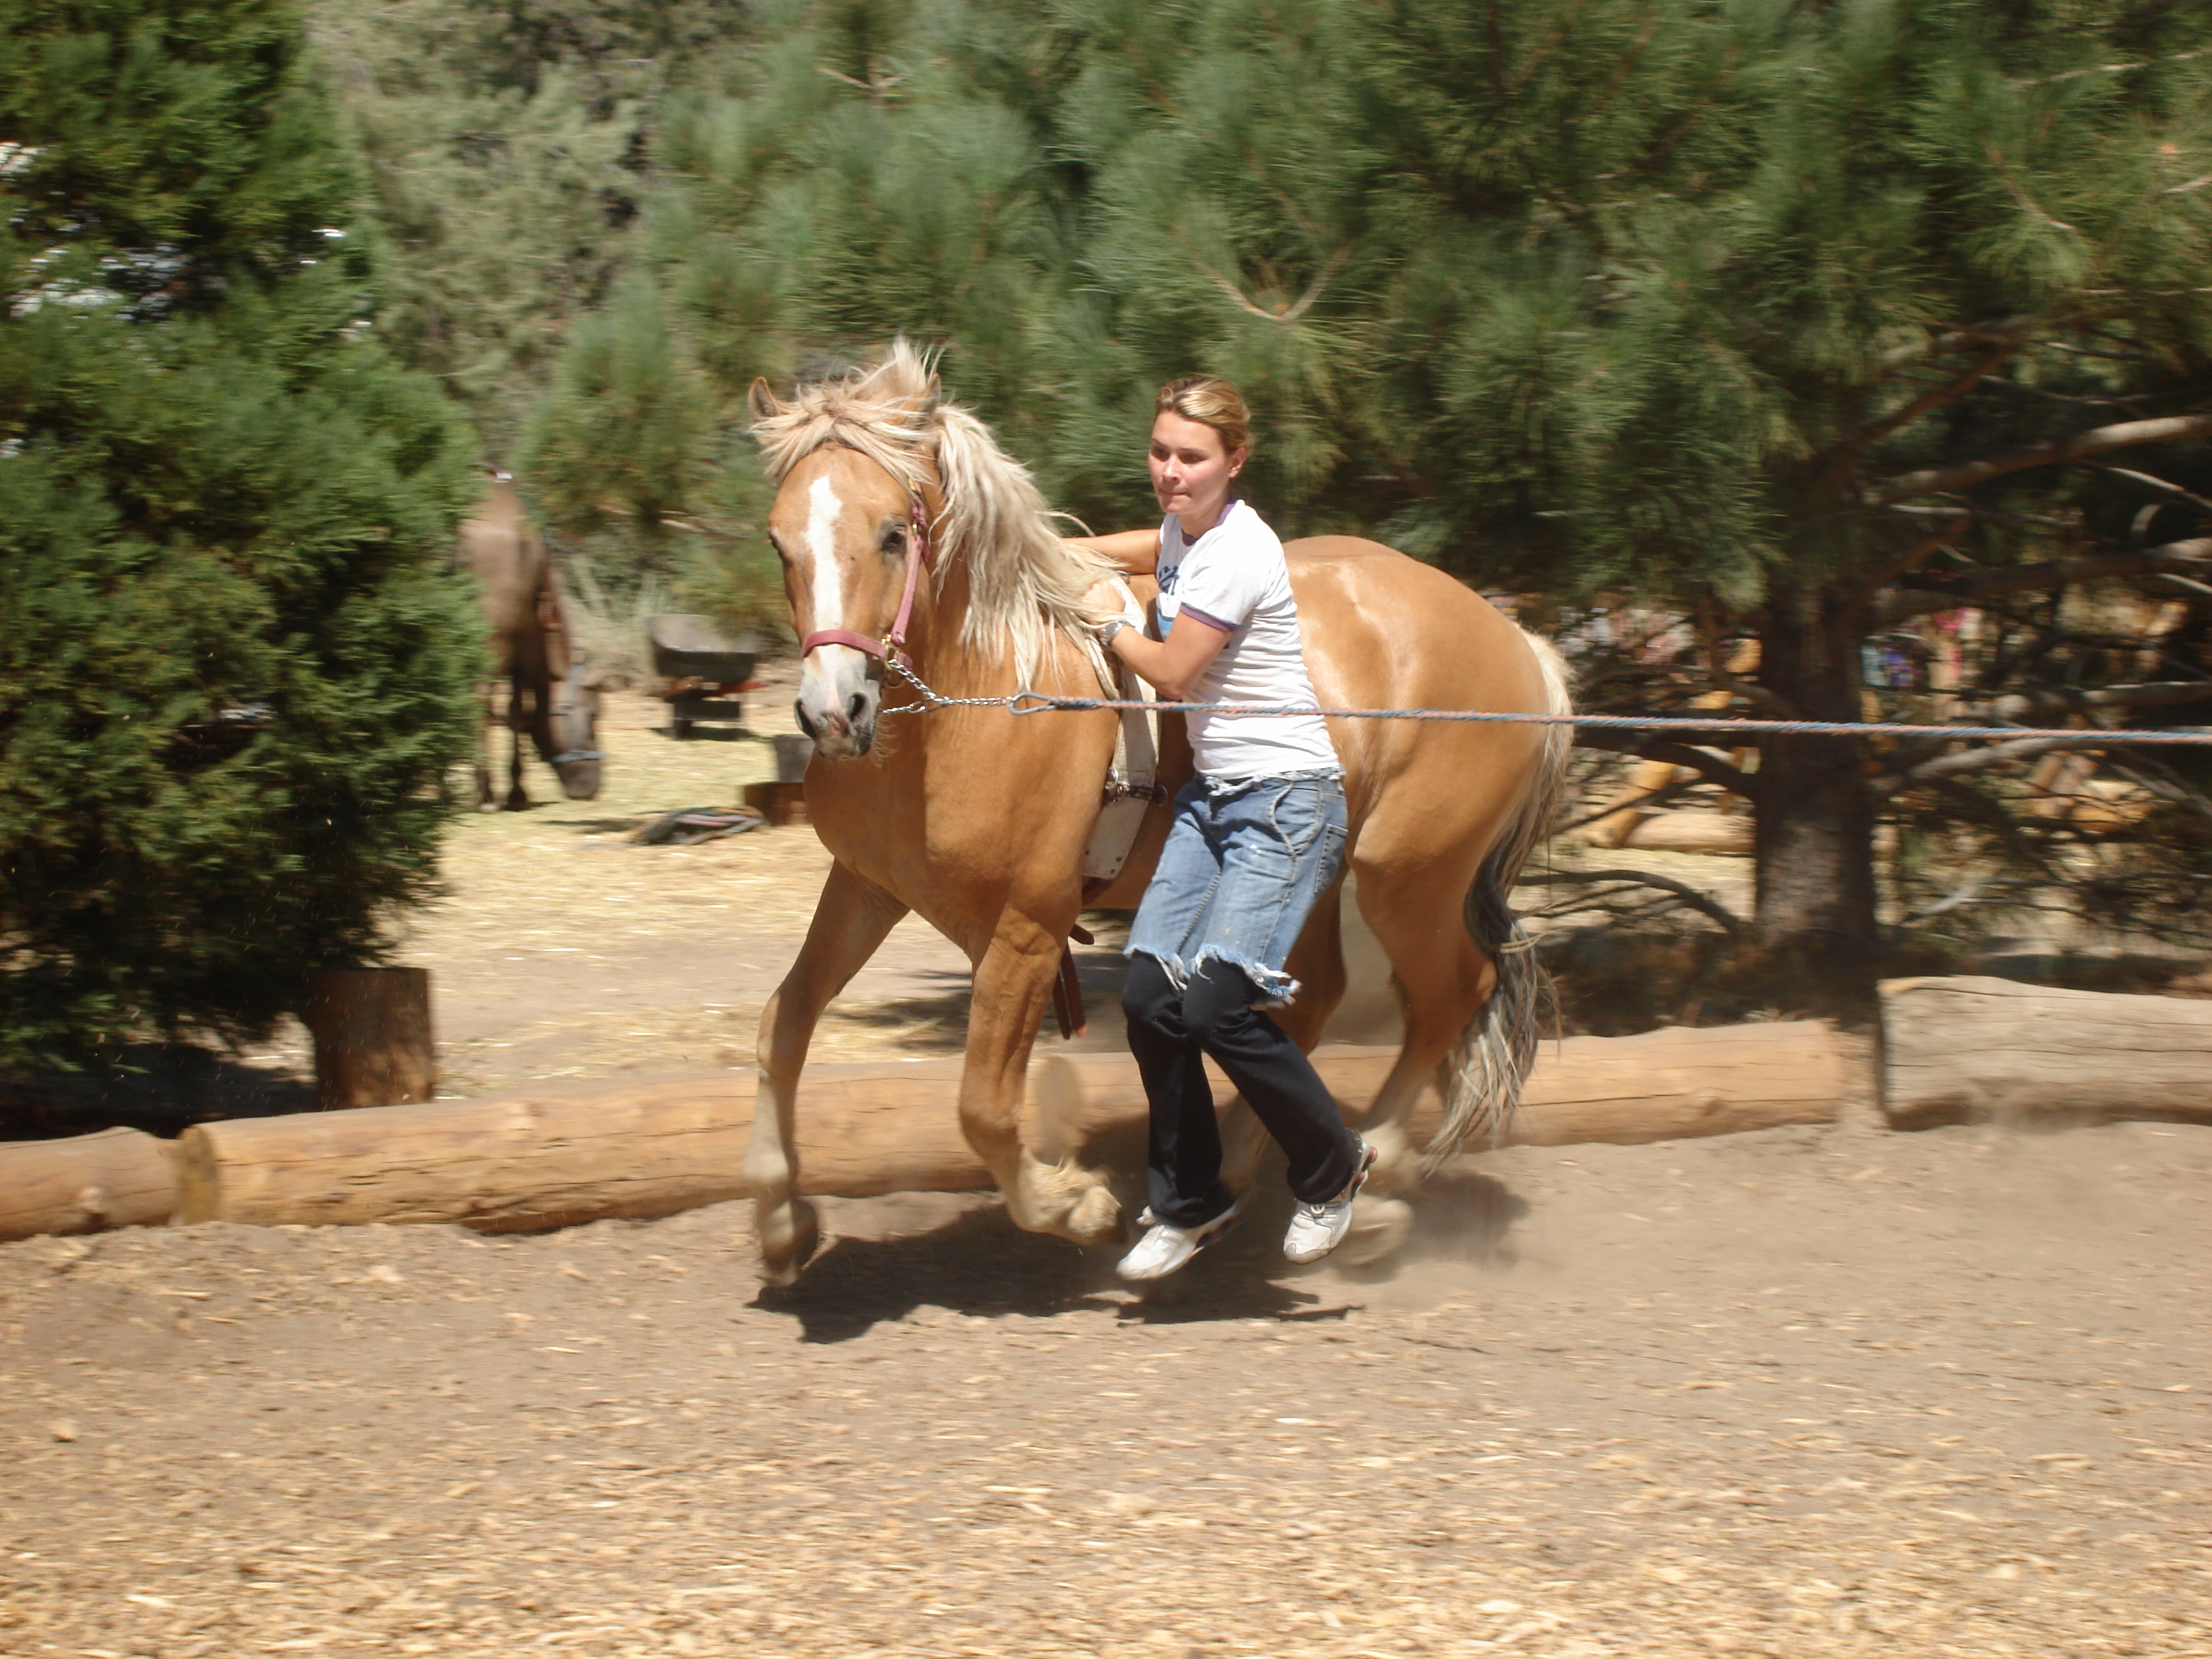 Kristina doing stunt work with horses